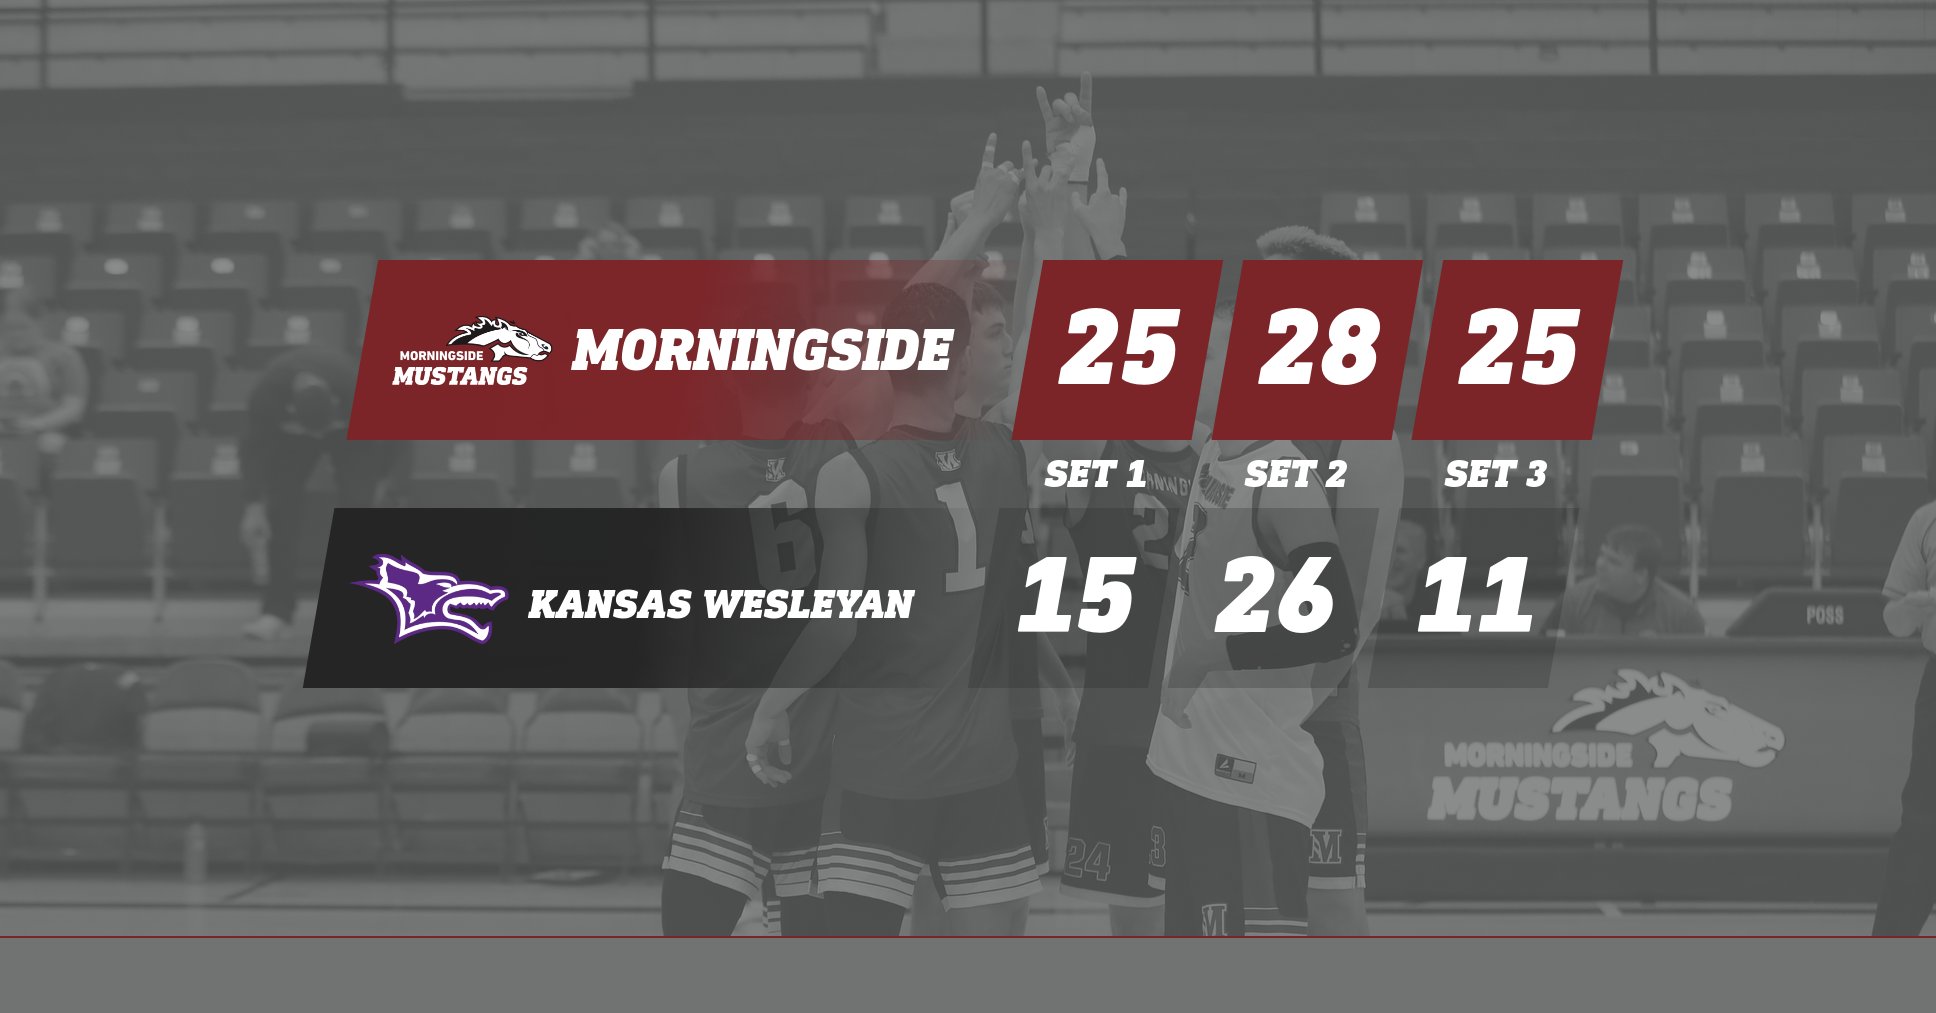 Morningside defeats Kansas Wesleyan, 25-15, 28-26, 25-11